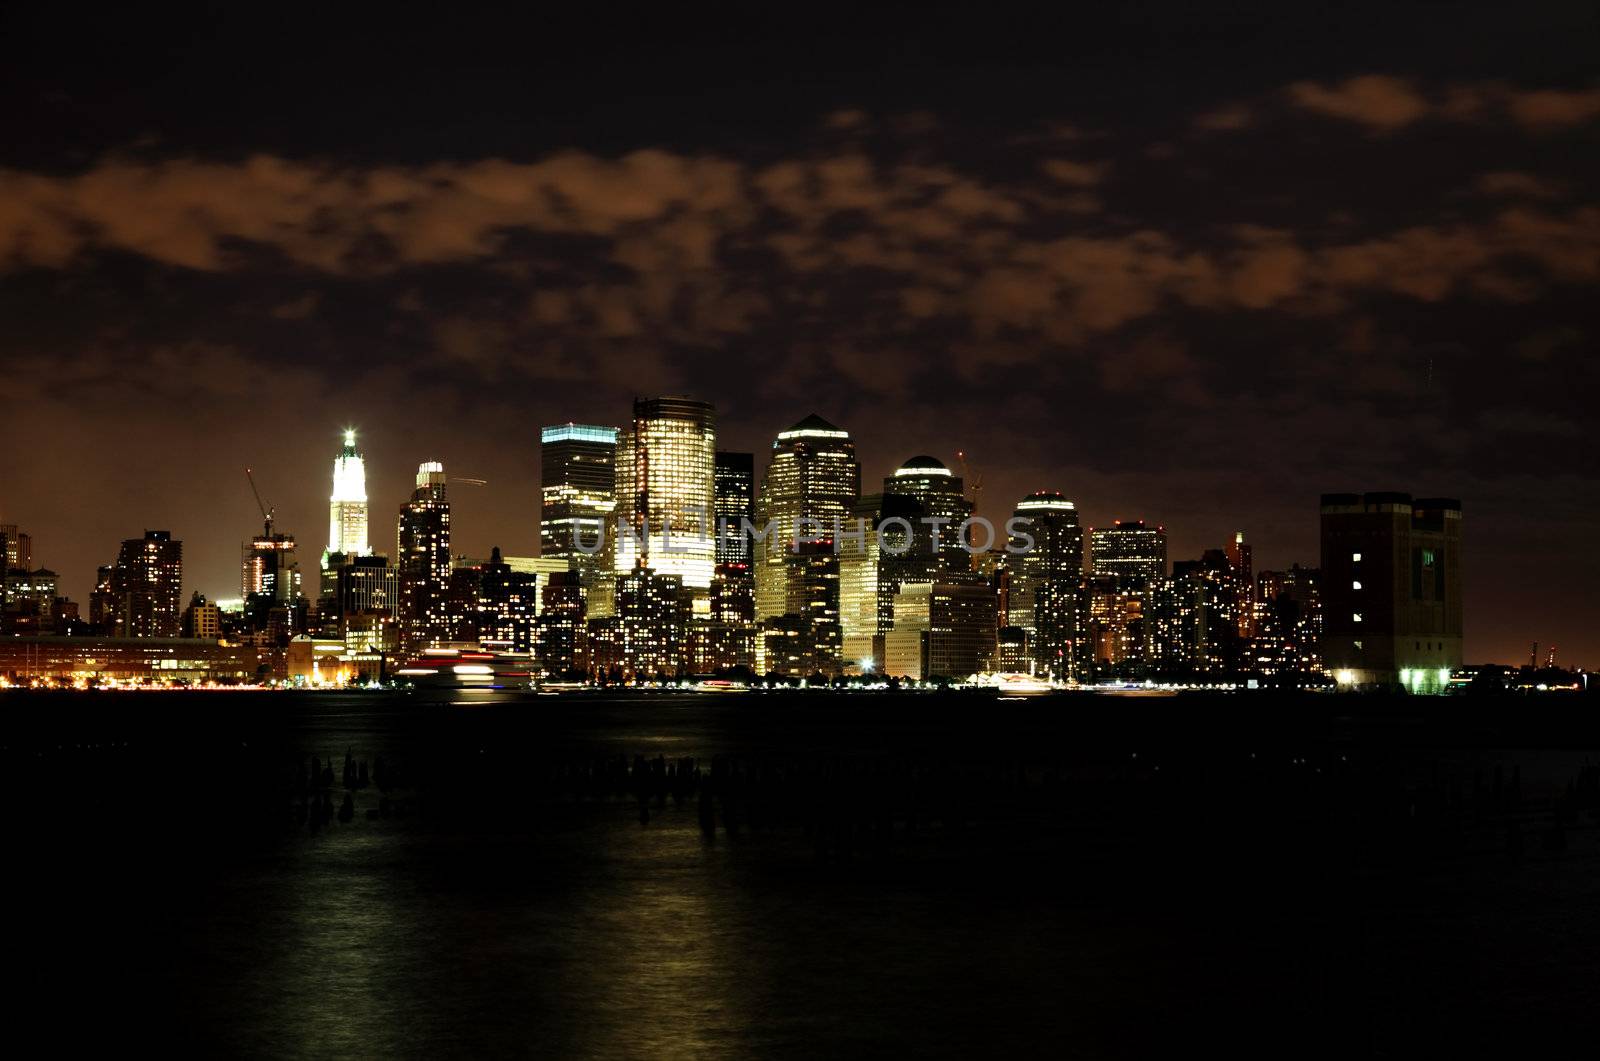 The Lower-Manhattan Skyline by gary718